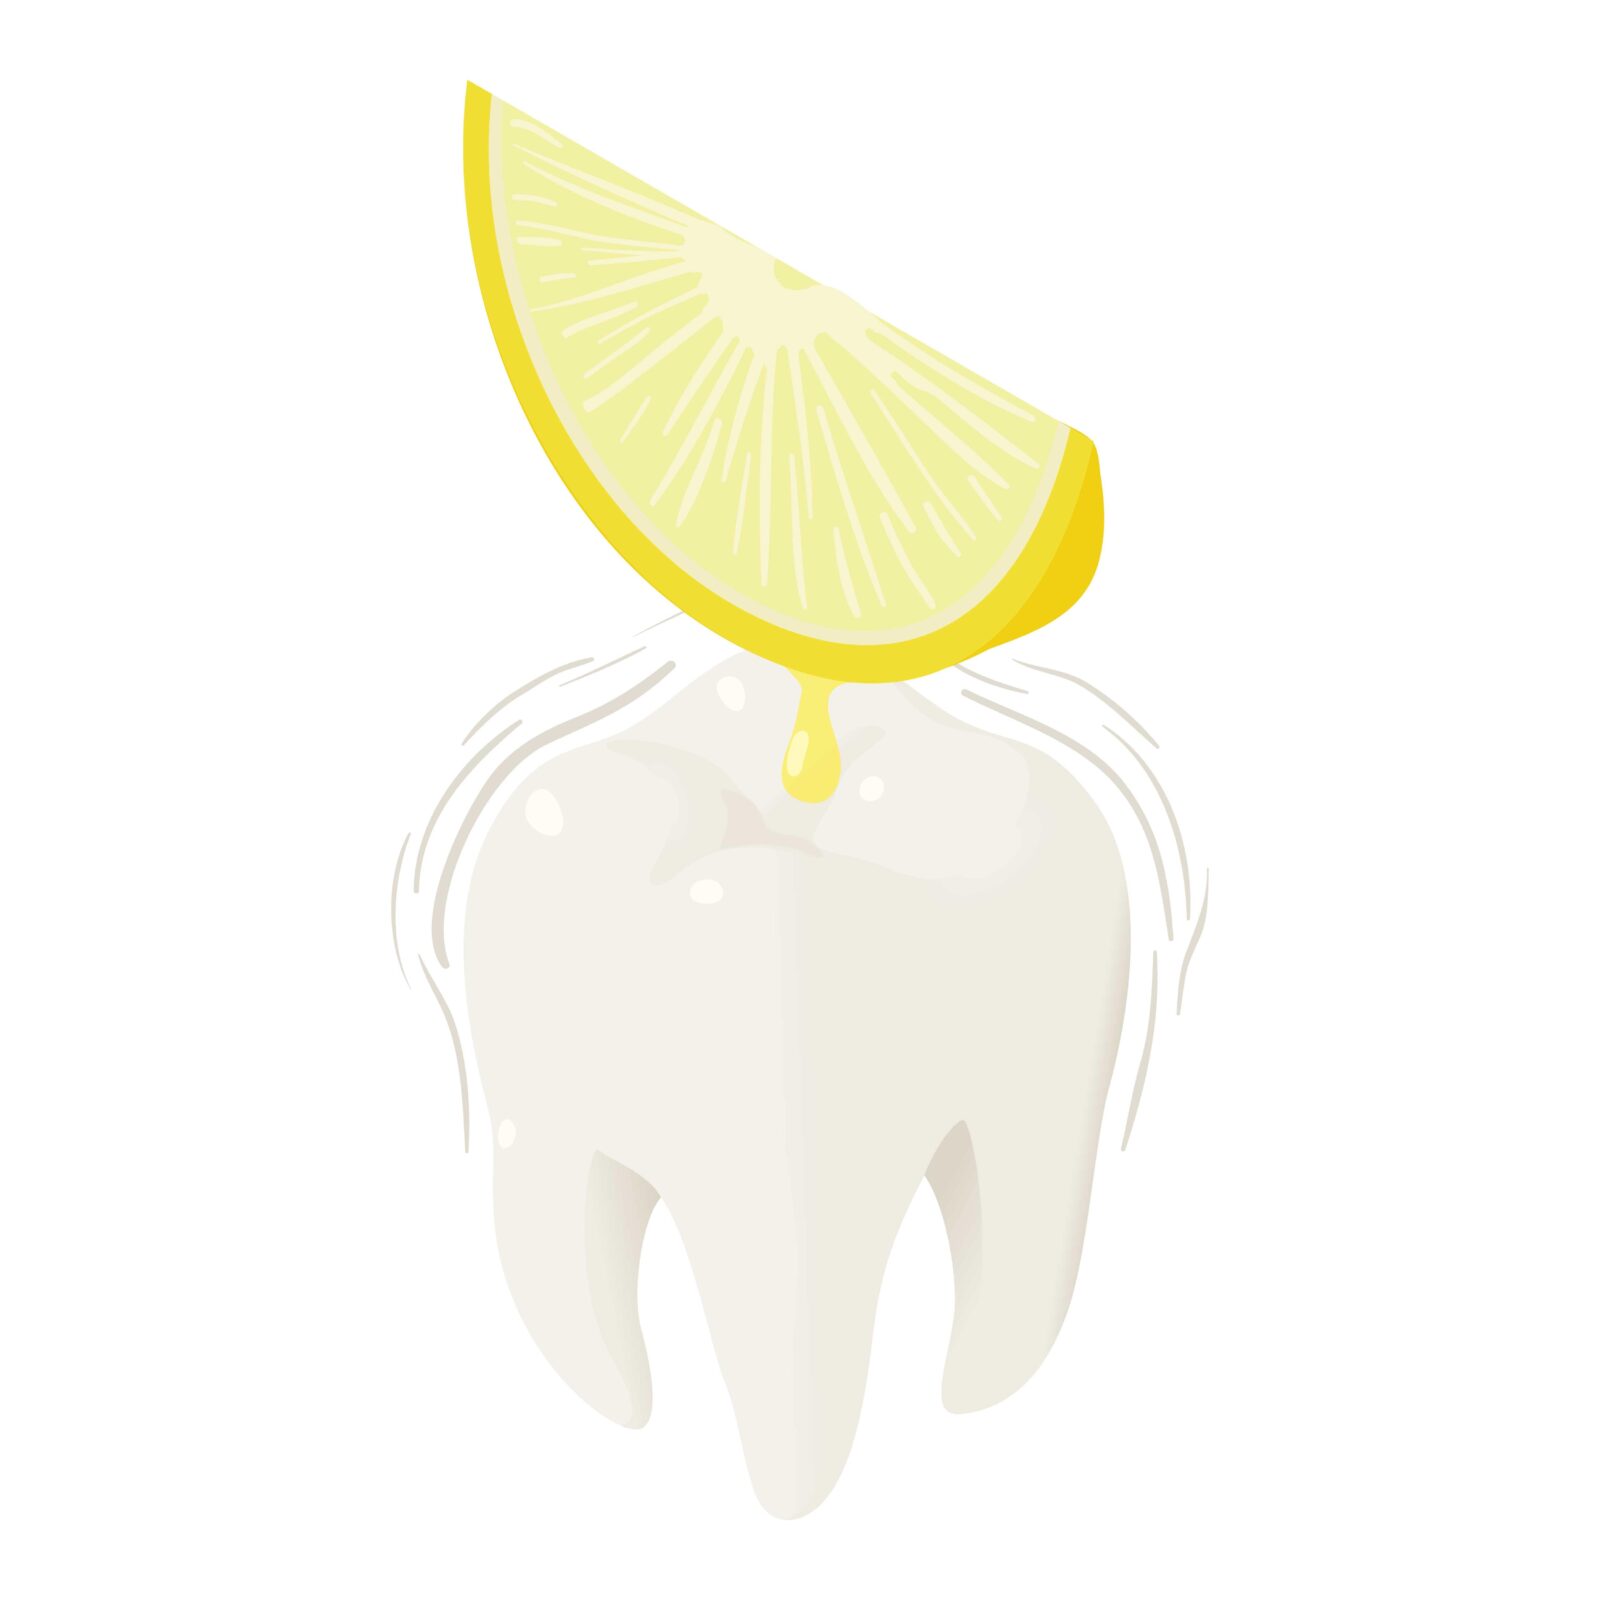 lemon on tooth. enamel erosion concept